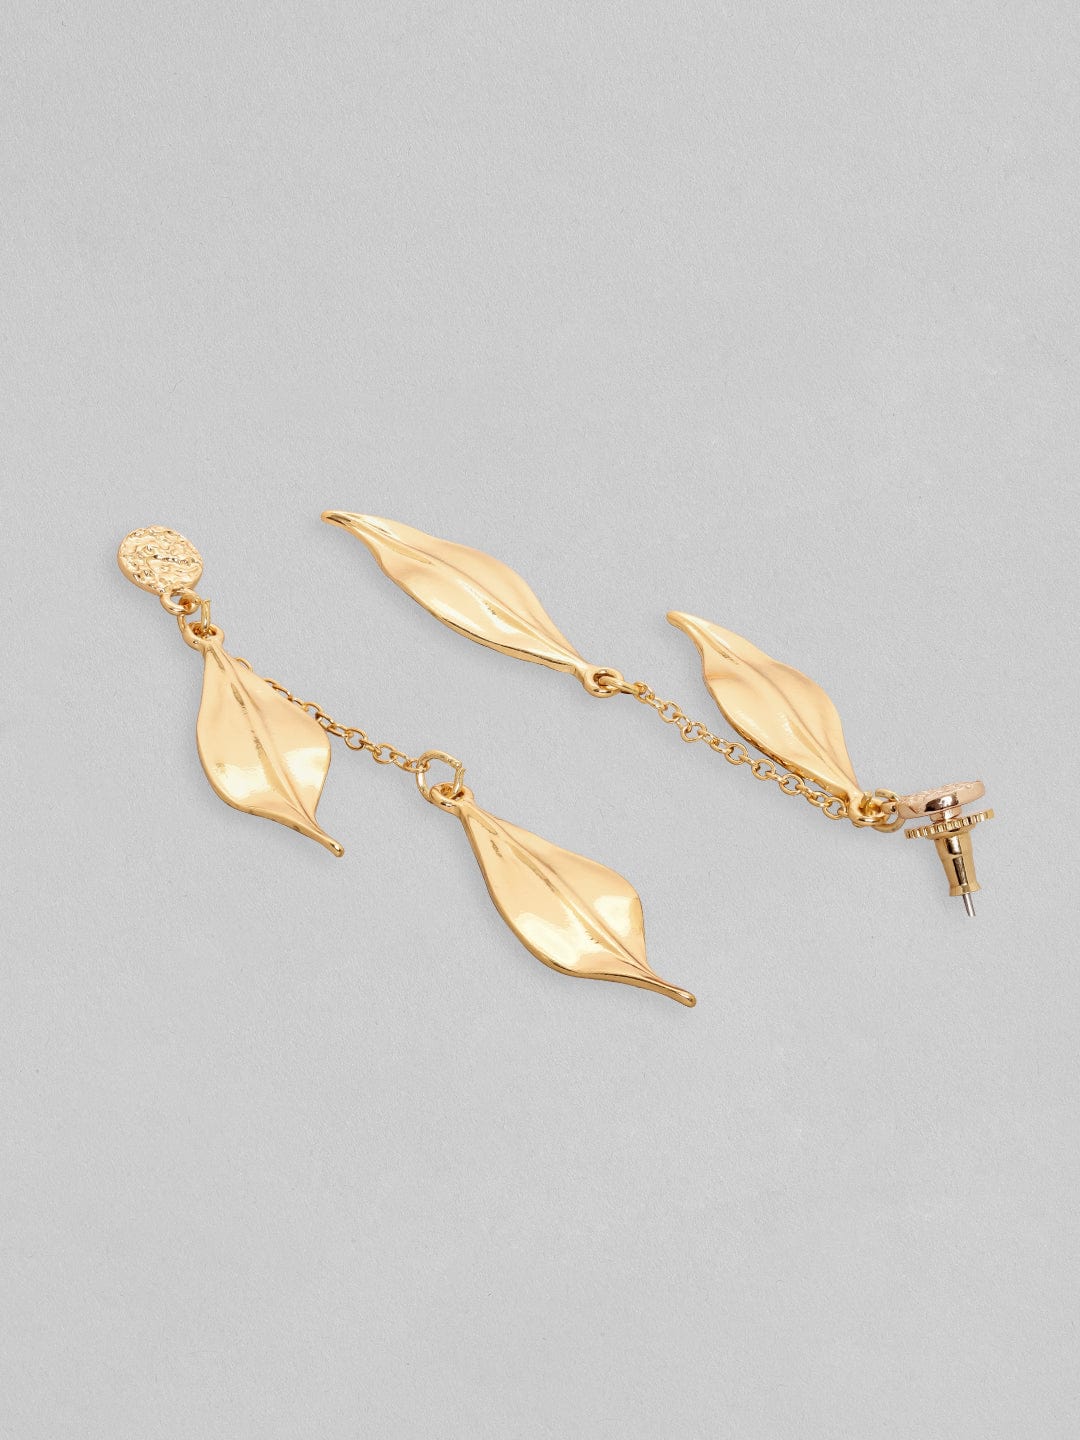 Rubans Voguish 18k Gold-Plated Leaf Shaped Drop Earrings Earrings